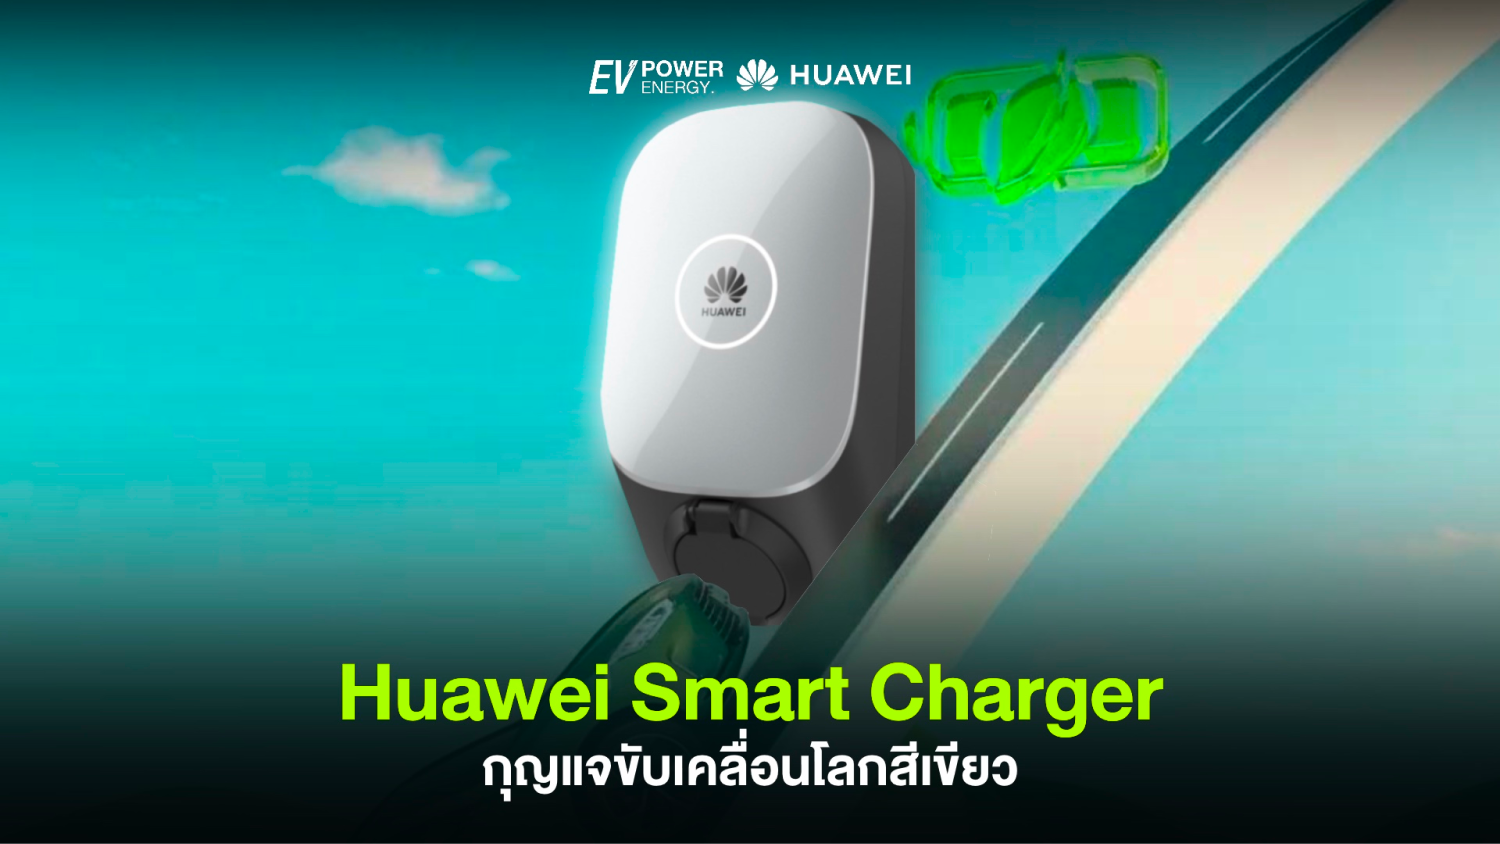 Huawei Smart Charger กุญแจขับเคลื่อนโลกสีเขียว